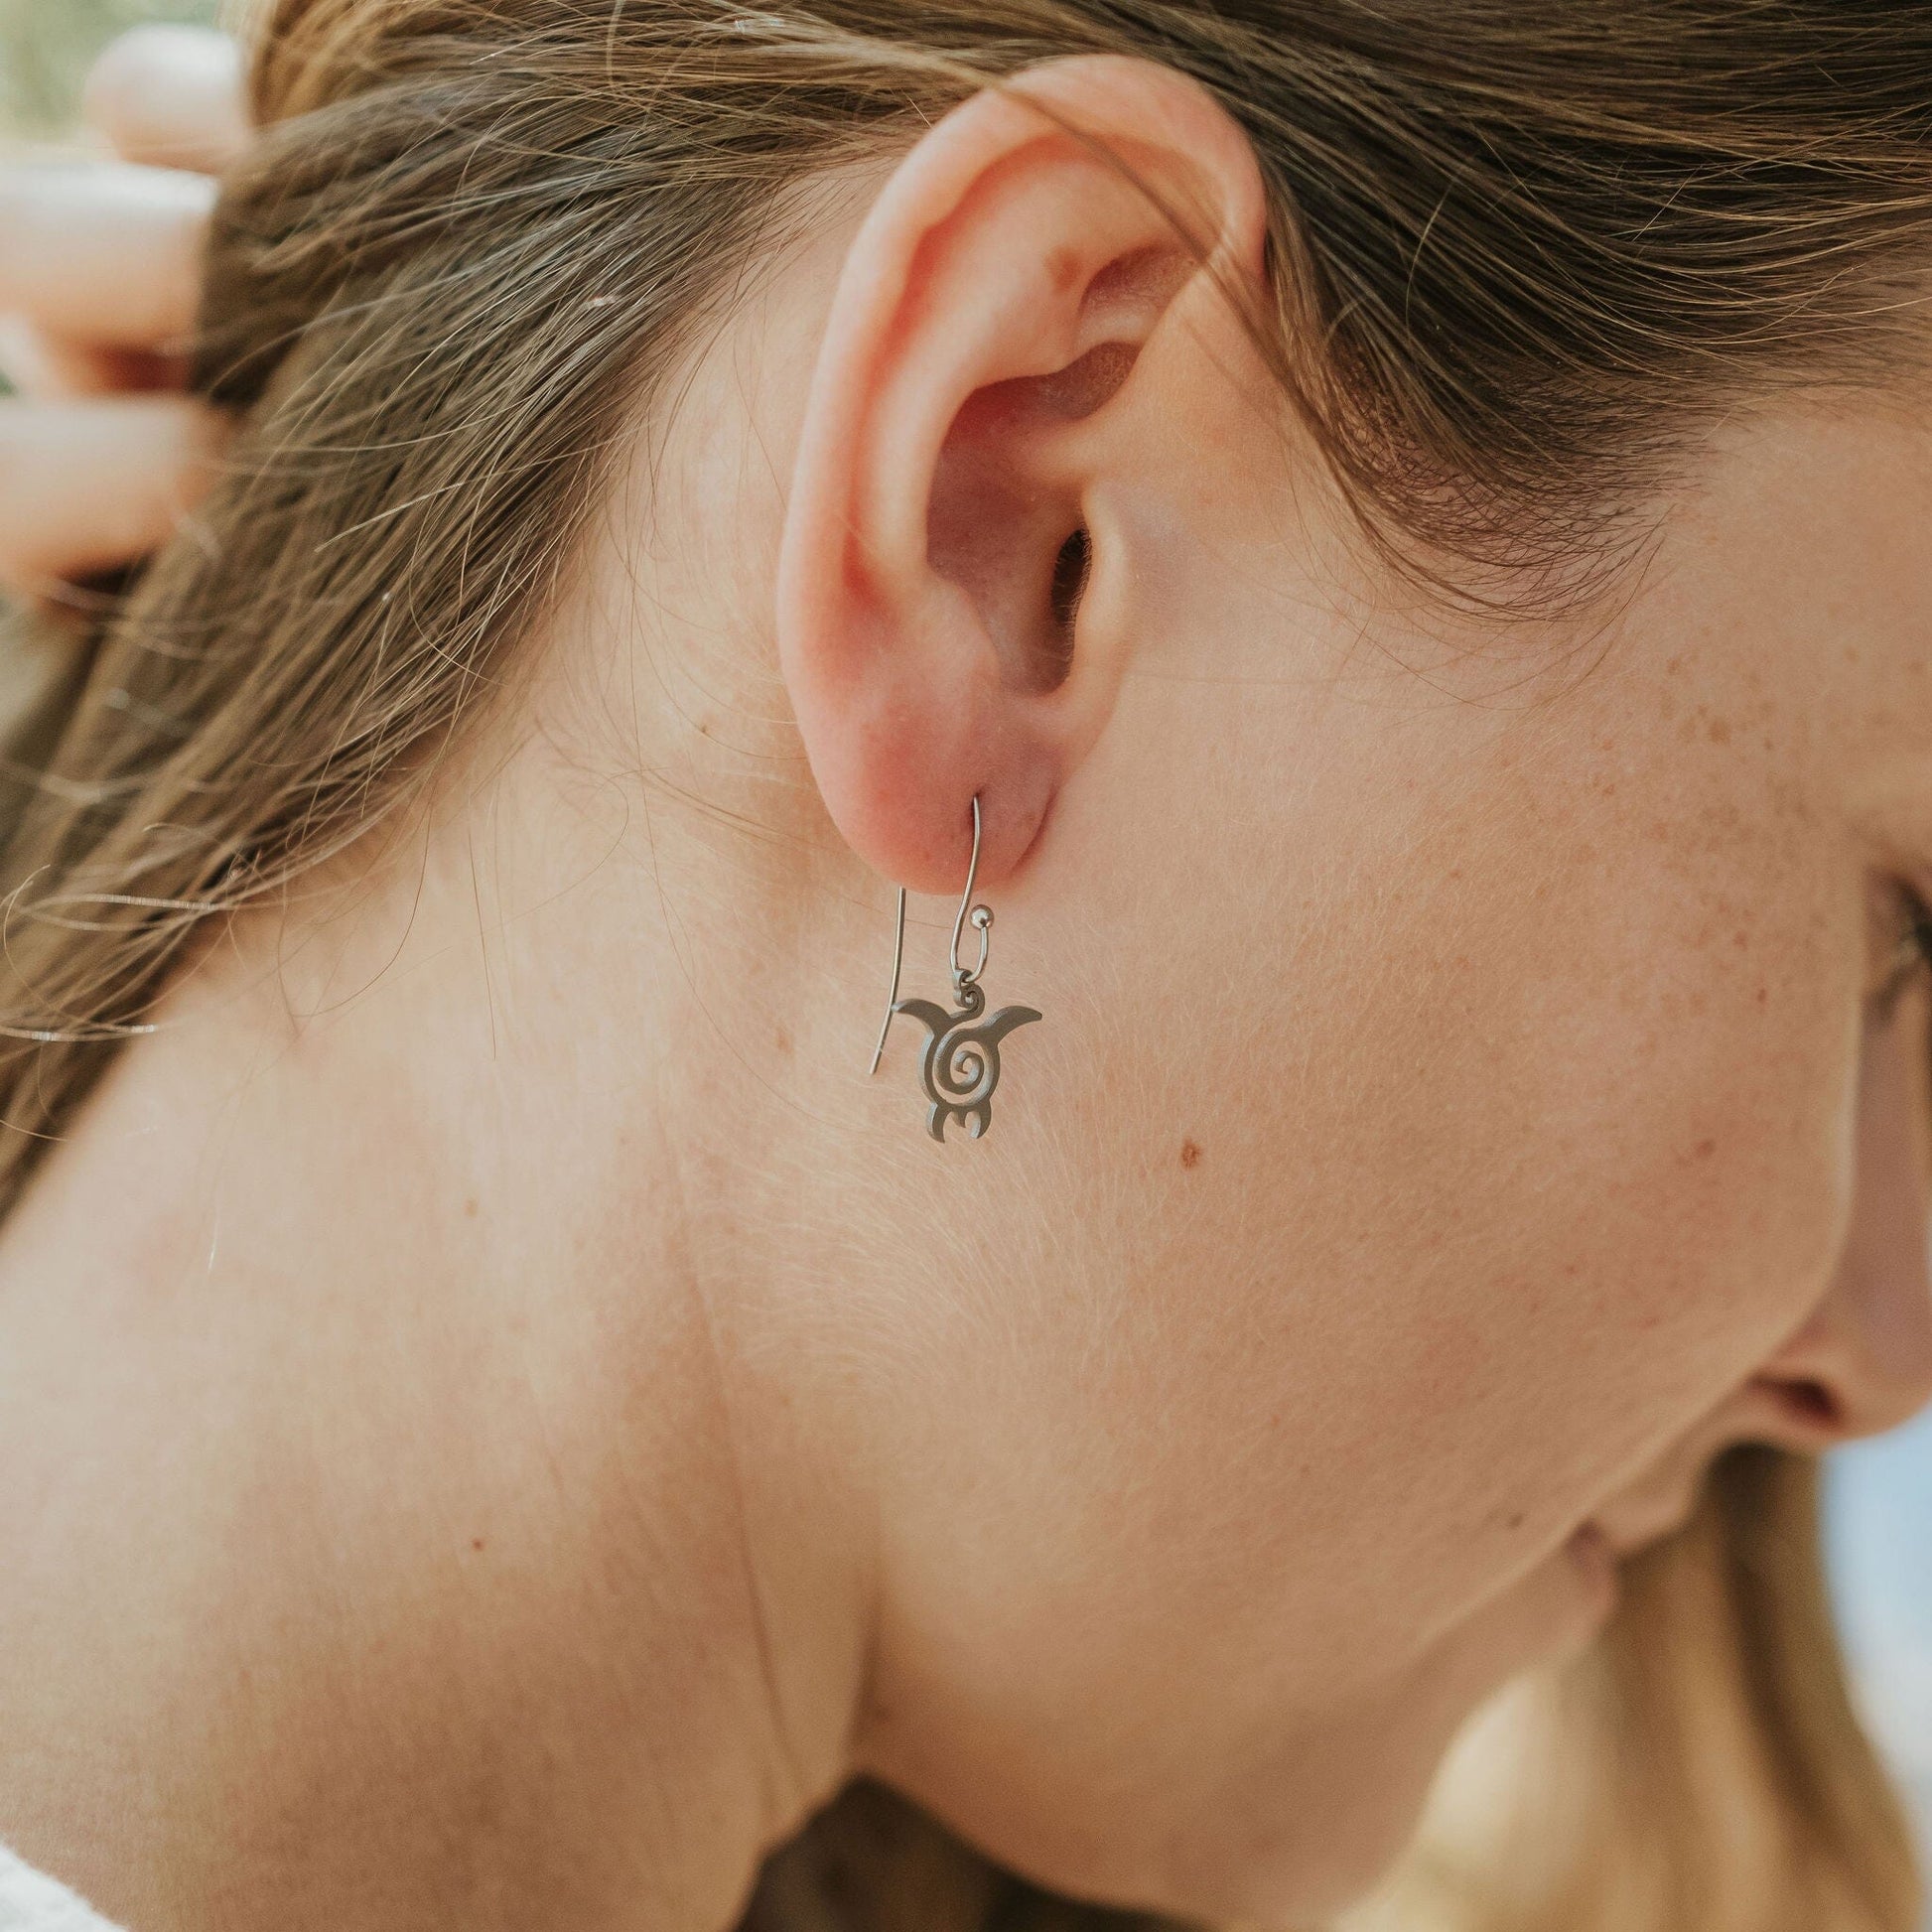 Girl wearing turtle earrings in stainless steel